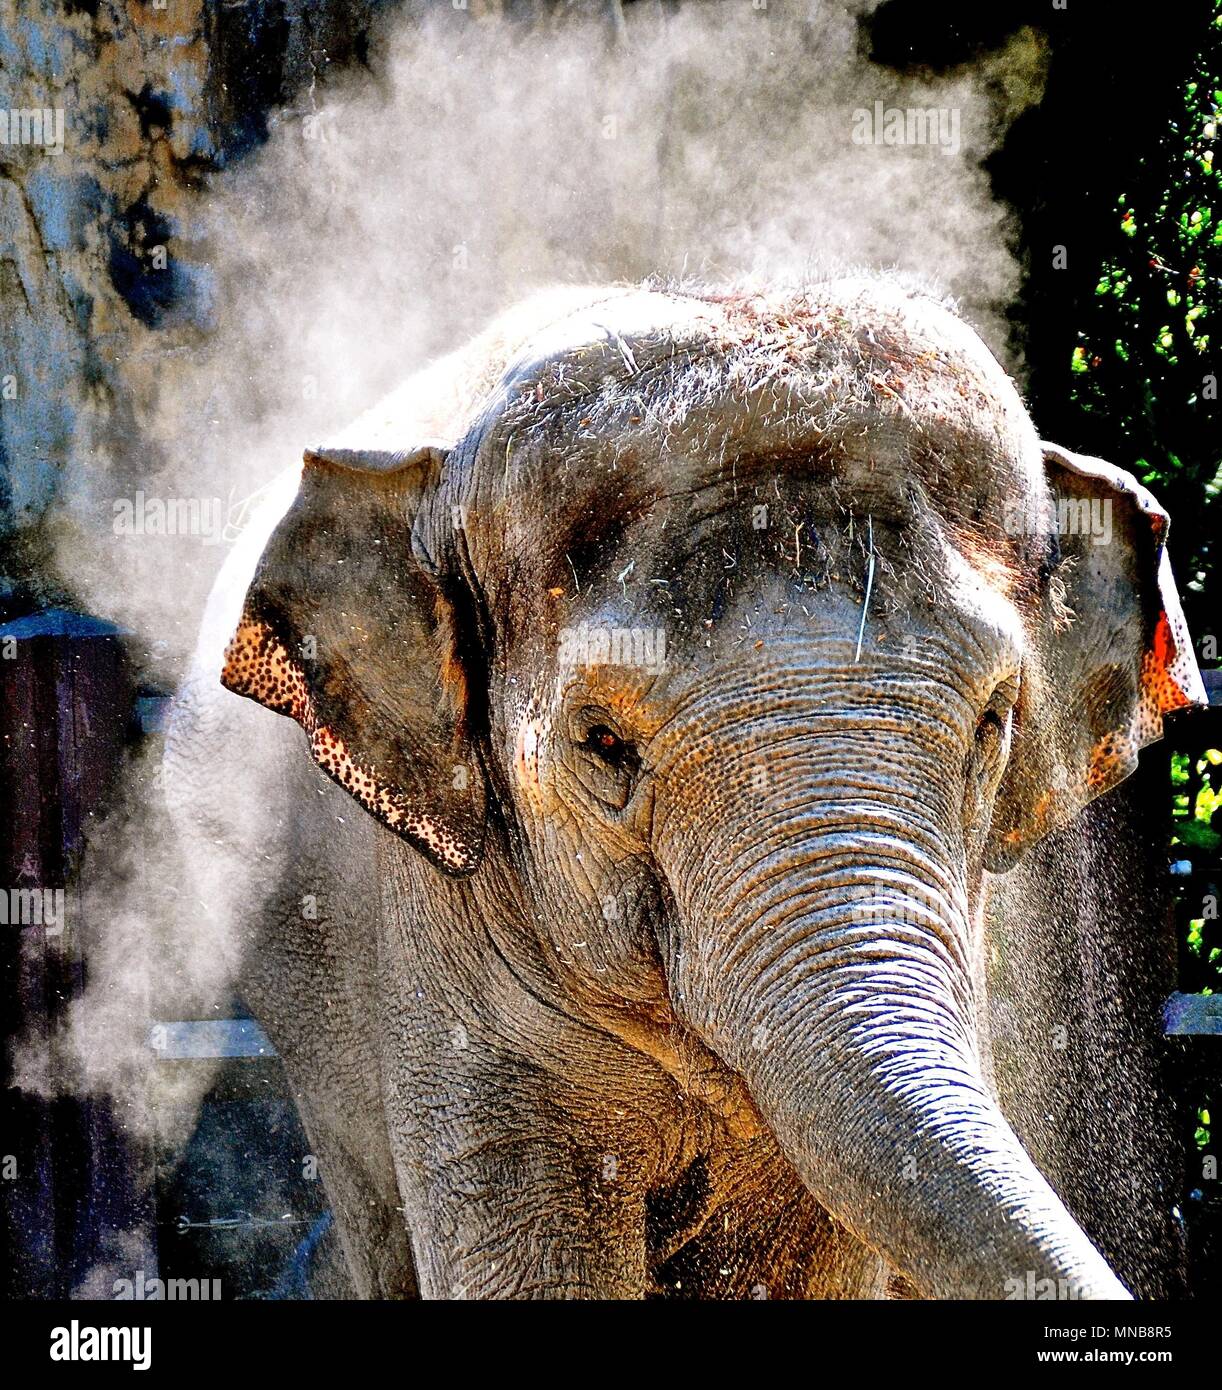 Elephant giving itself a dust bath Stock Photo